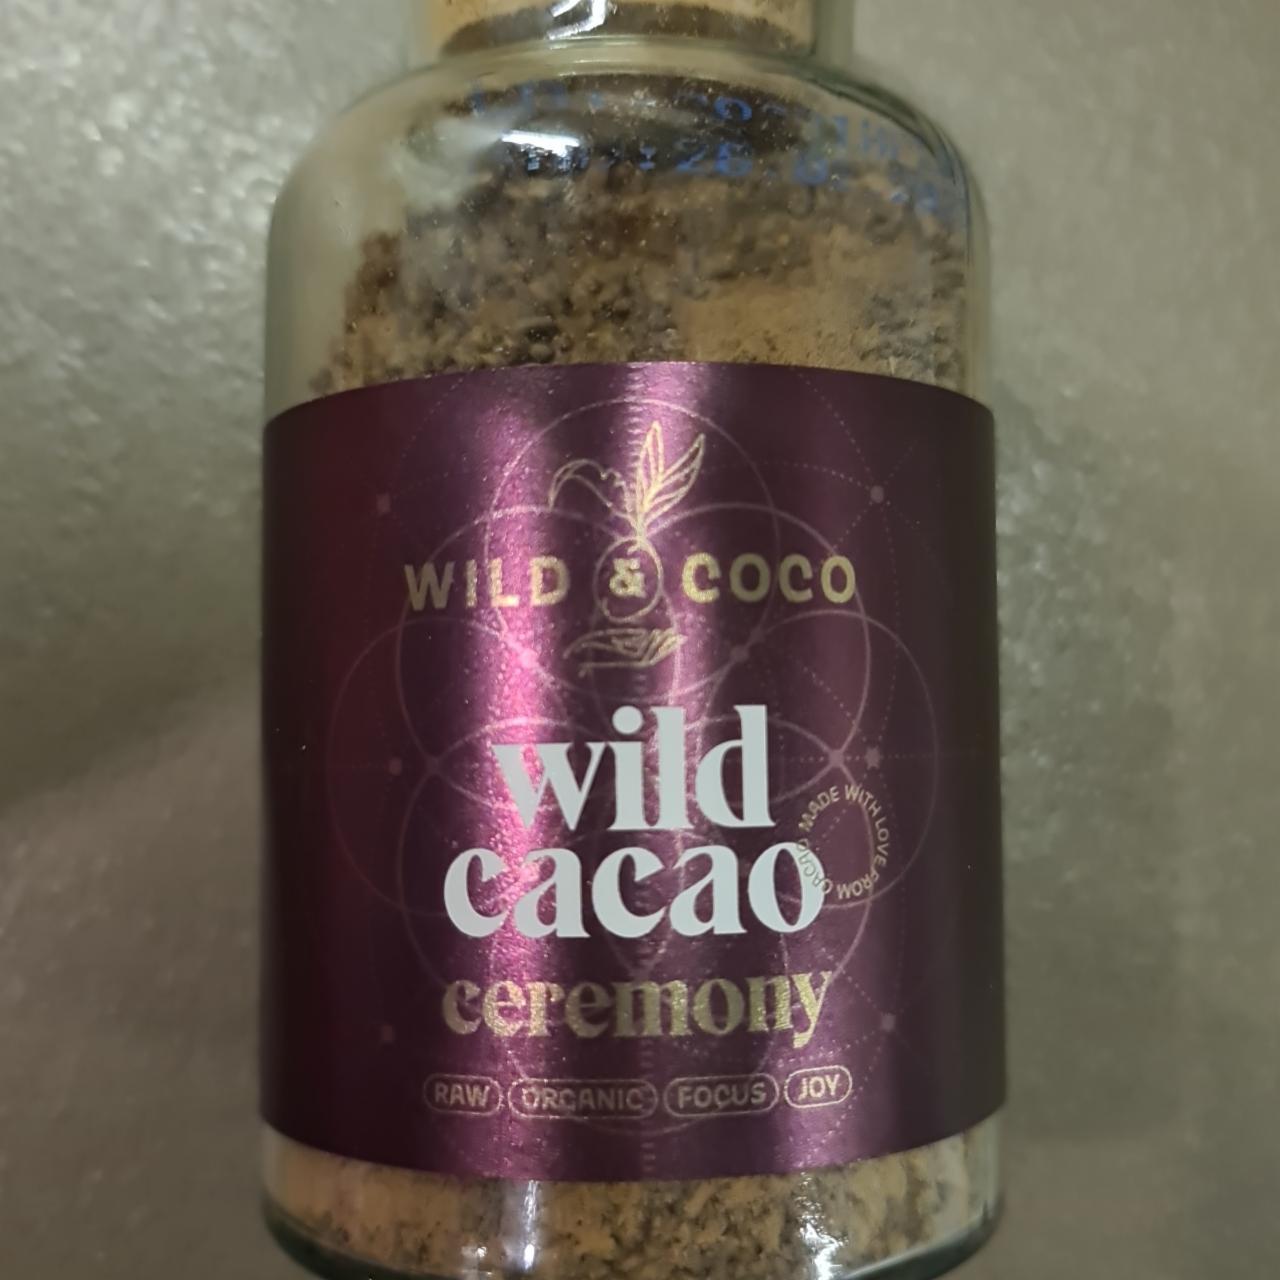 Fotografie - Wild cacao ceremony Wild&coco